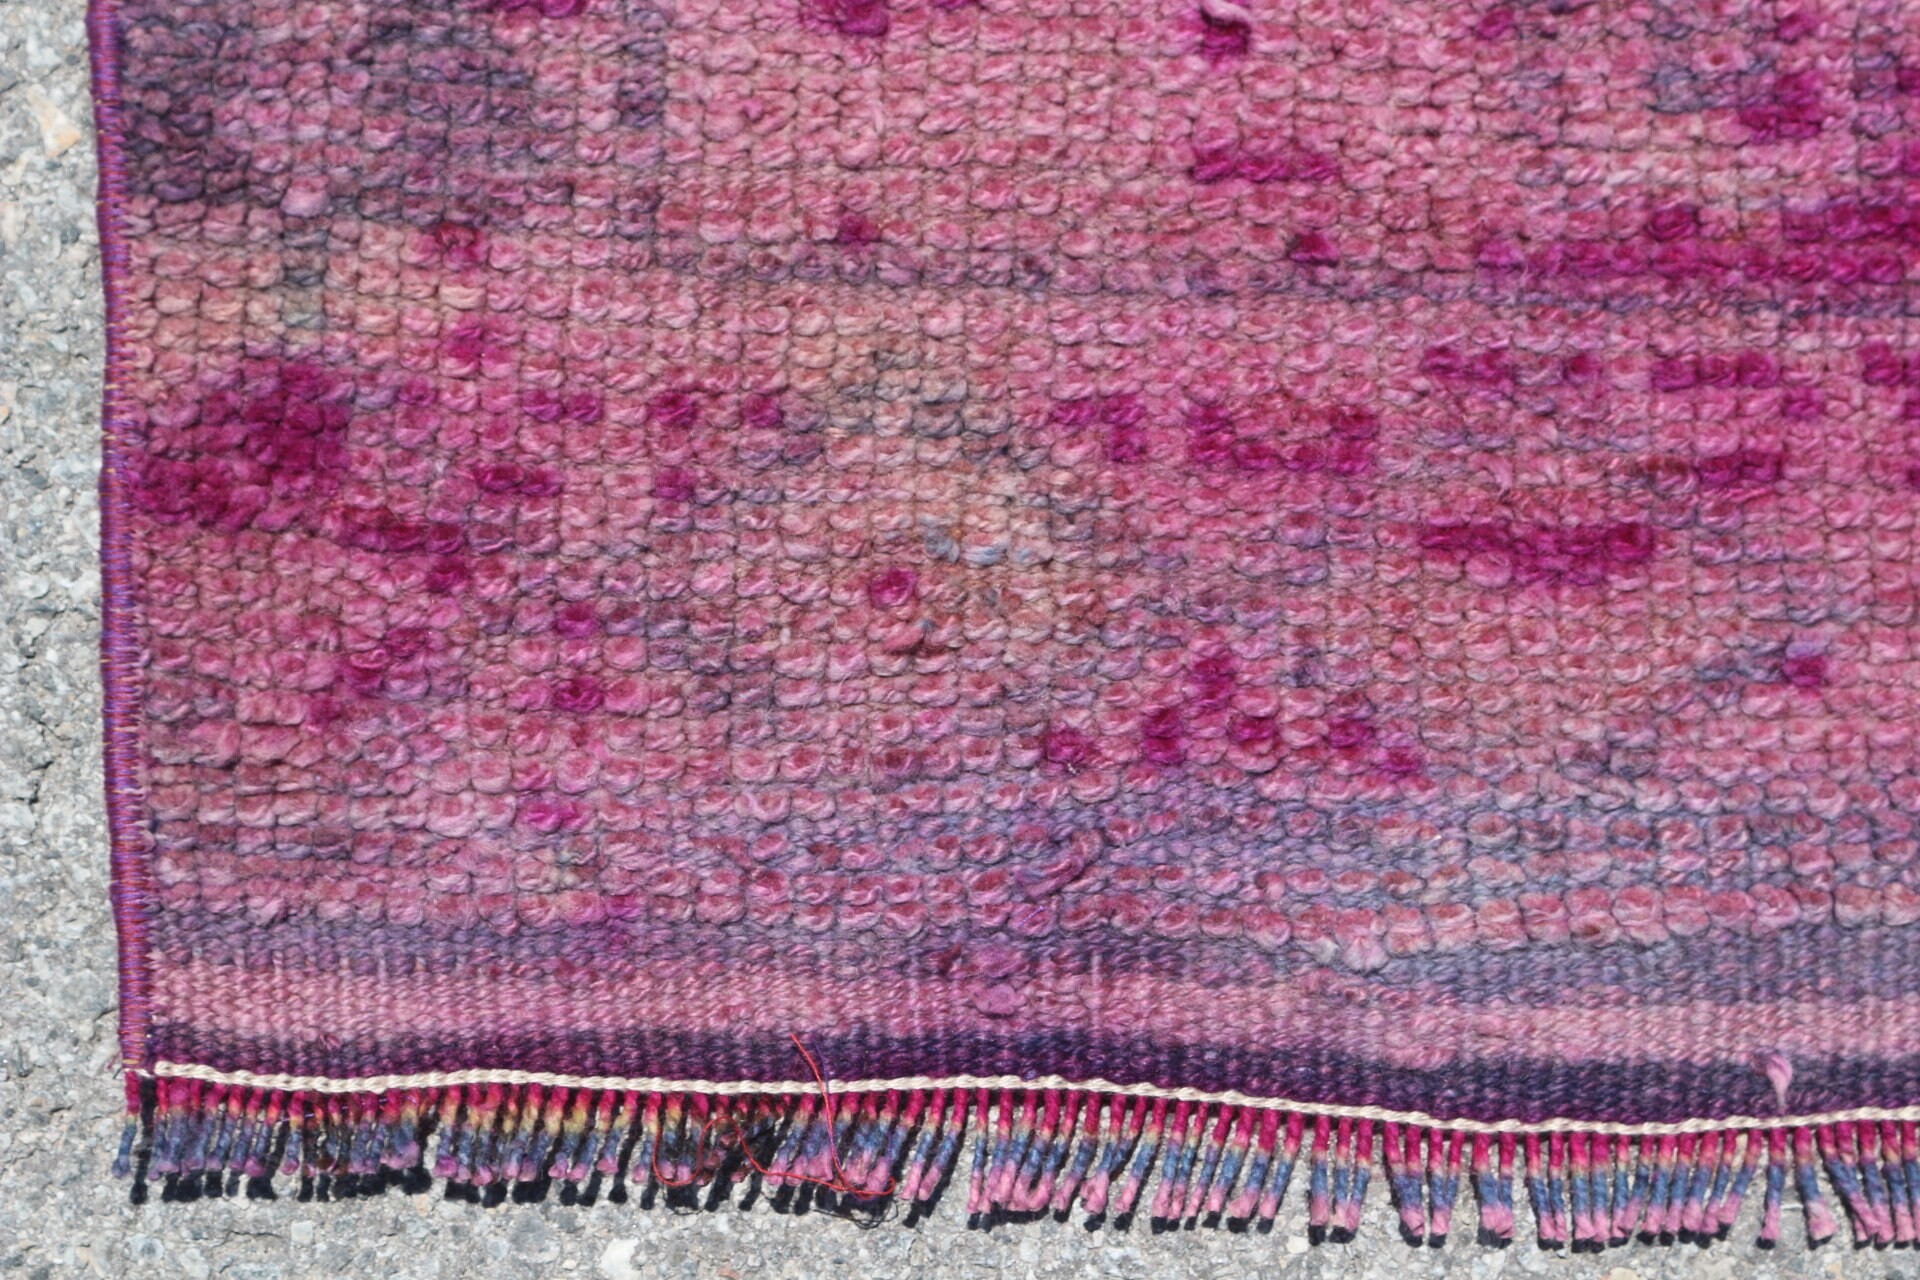 Vintage Rugs, Pink Cool Rugs, Turkish Rug, Kitchen Rug, 2.2x10.2 ft Runner Rug, Antique Rug, Long Runner Rug Rugs, Rugs for Kitchen